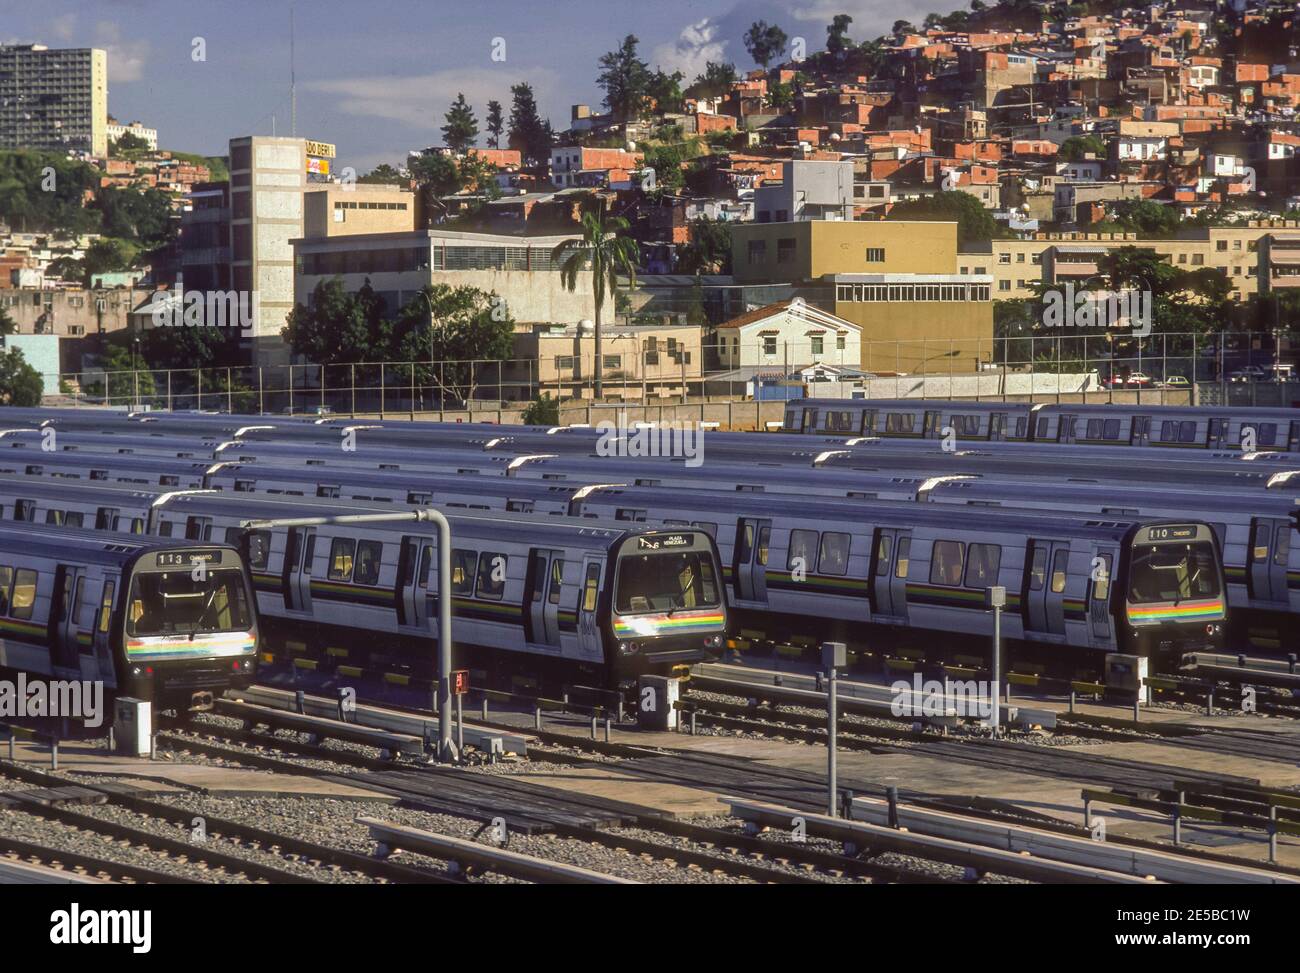 CARACAS, VENEZUELA, 1988 - Metro train cars parked in train yard. Stock Photo